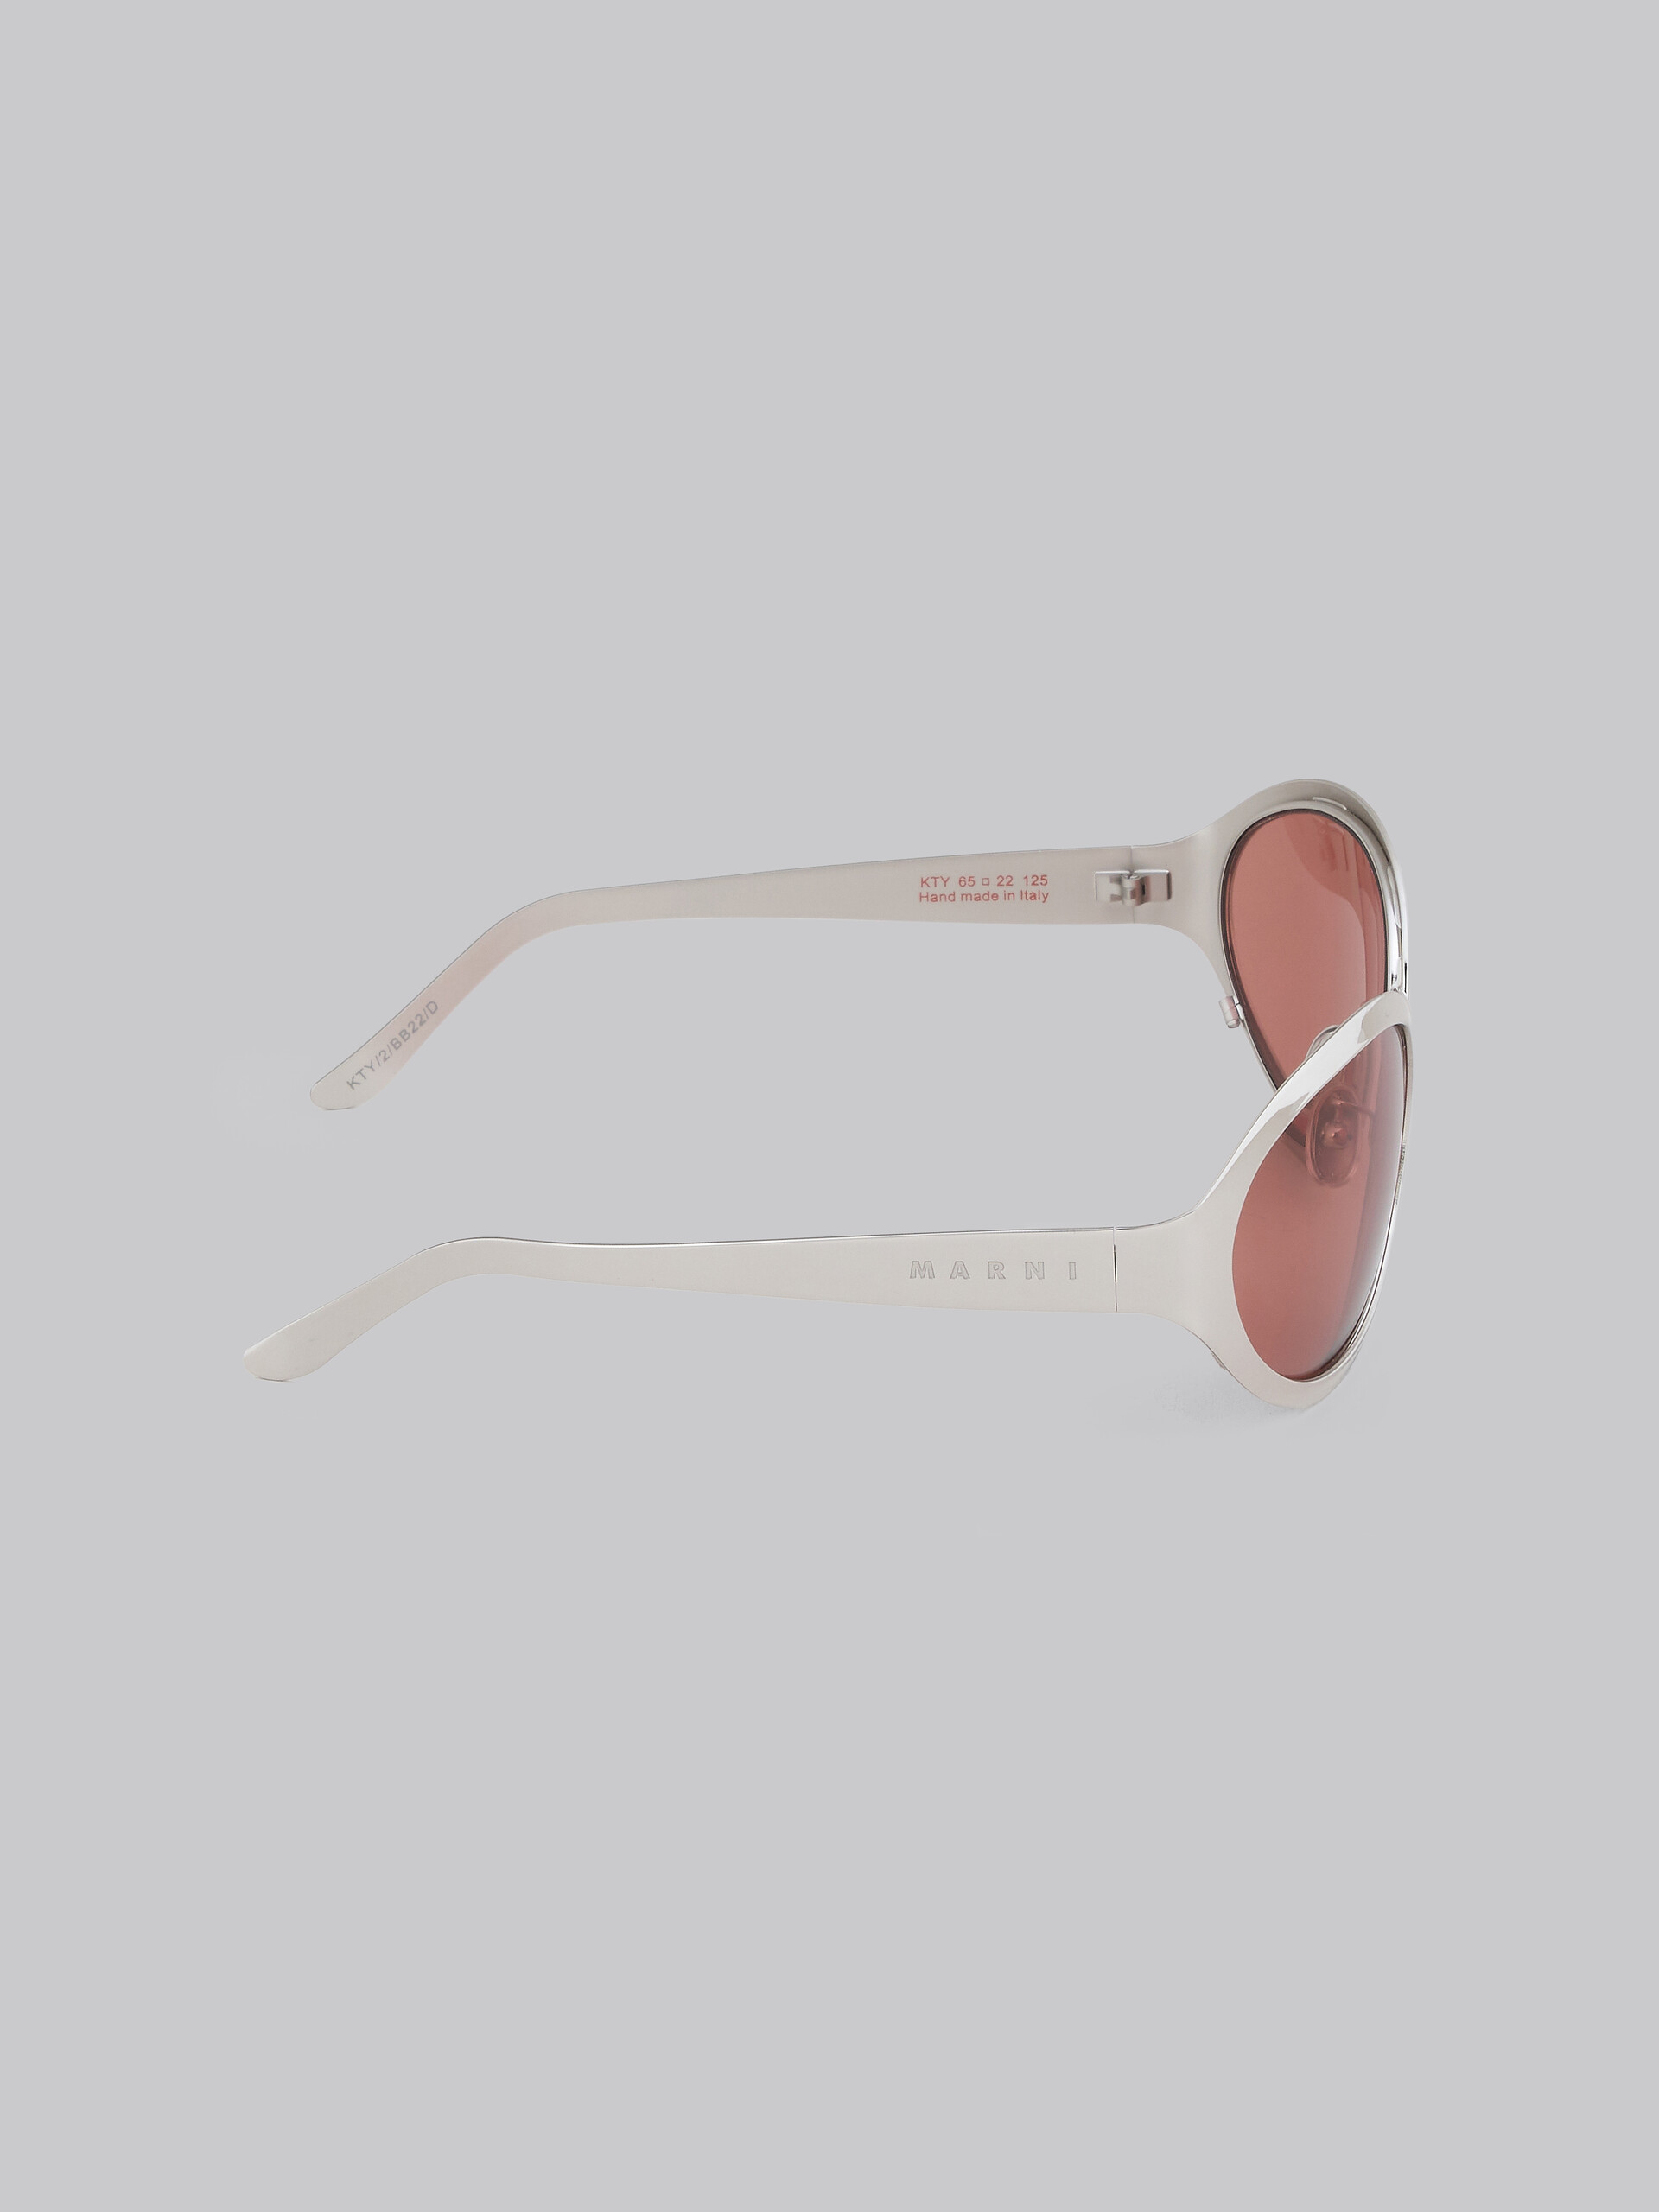 To-Sua green sunglasses - Optical - Image 4